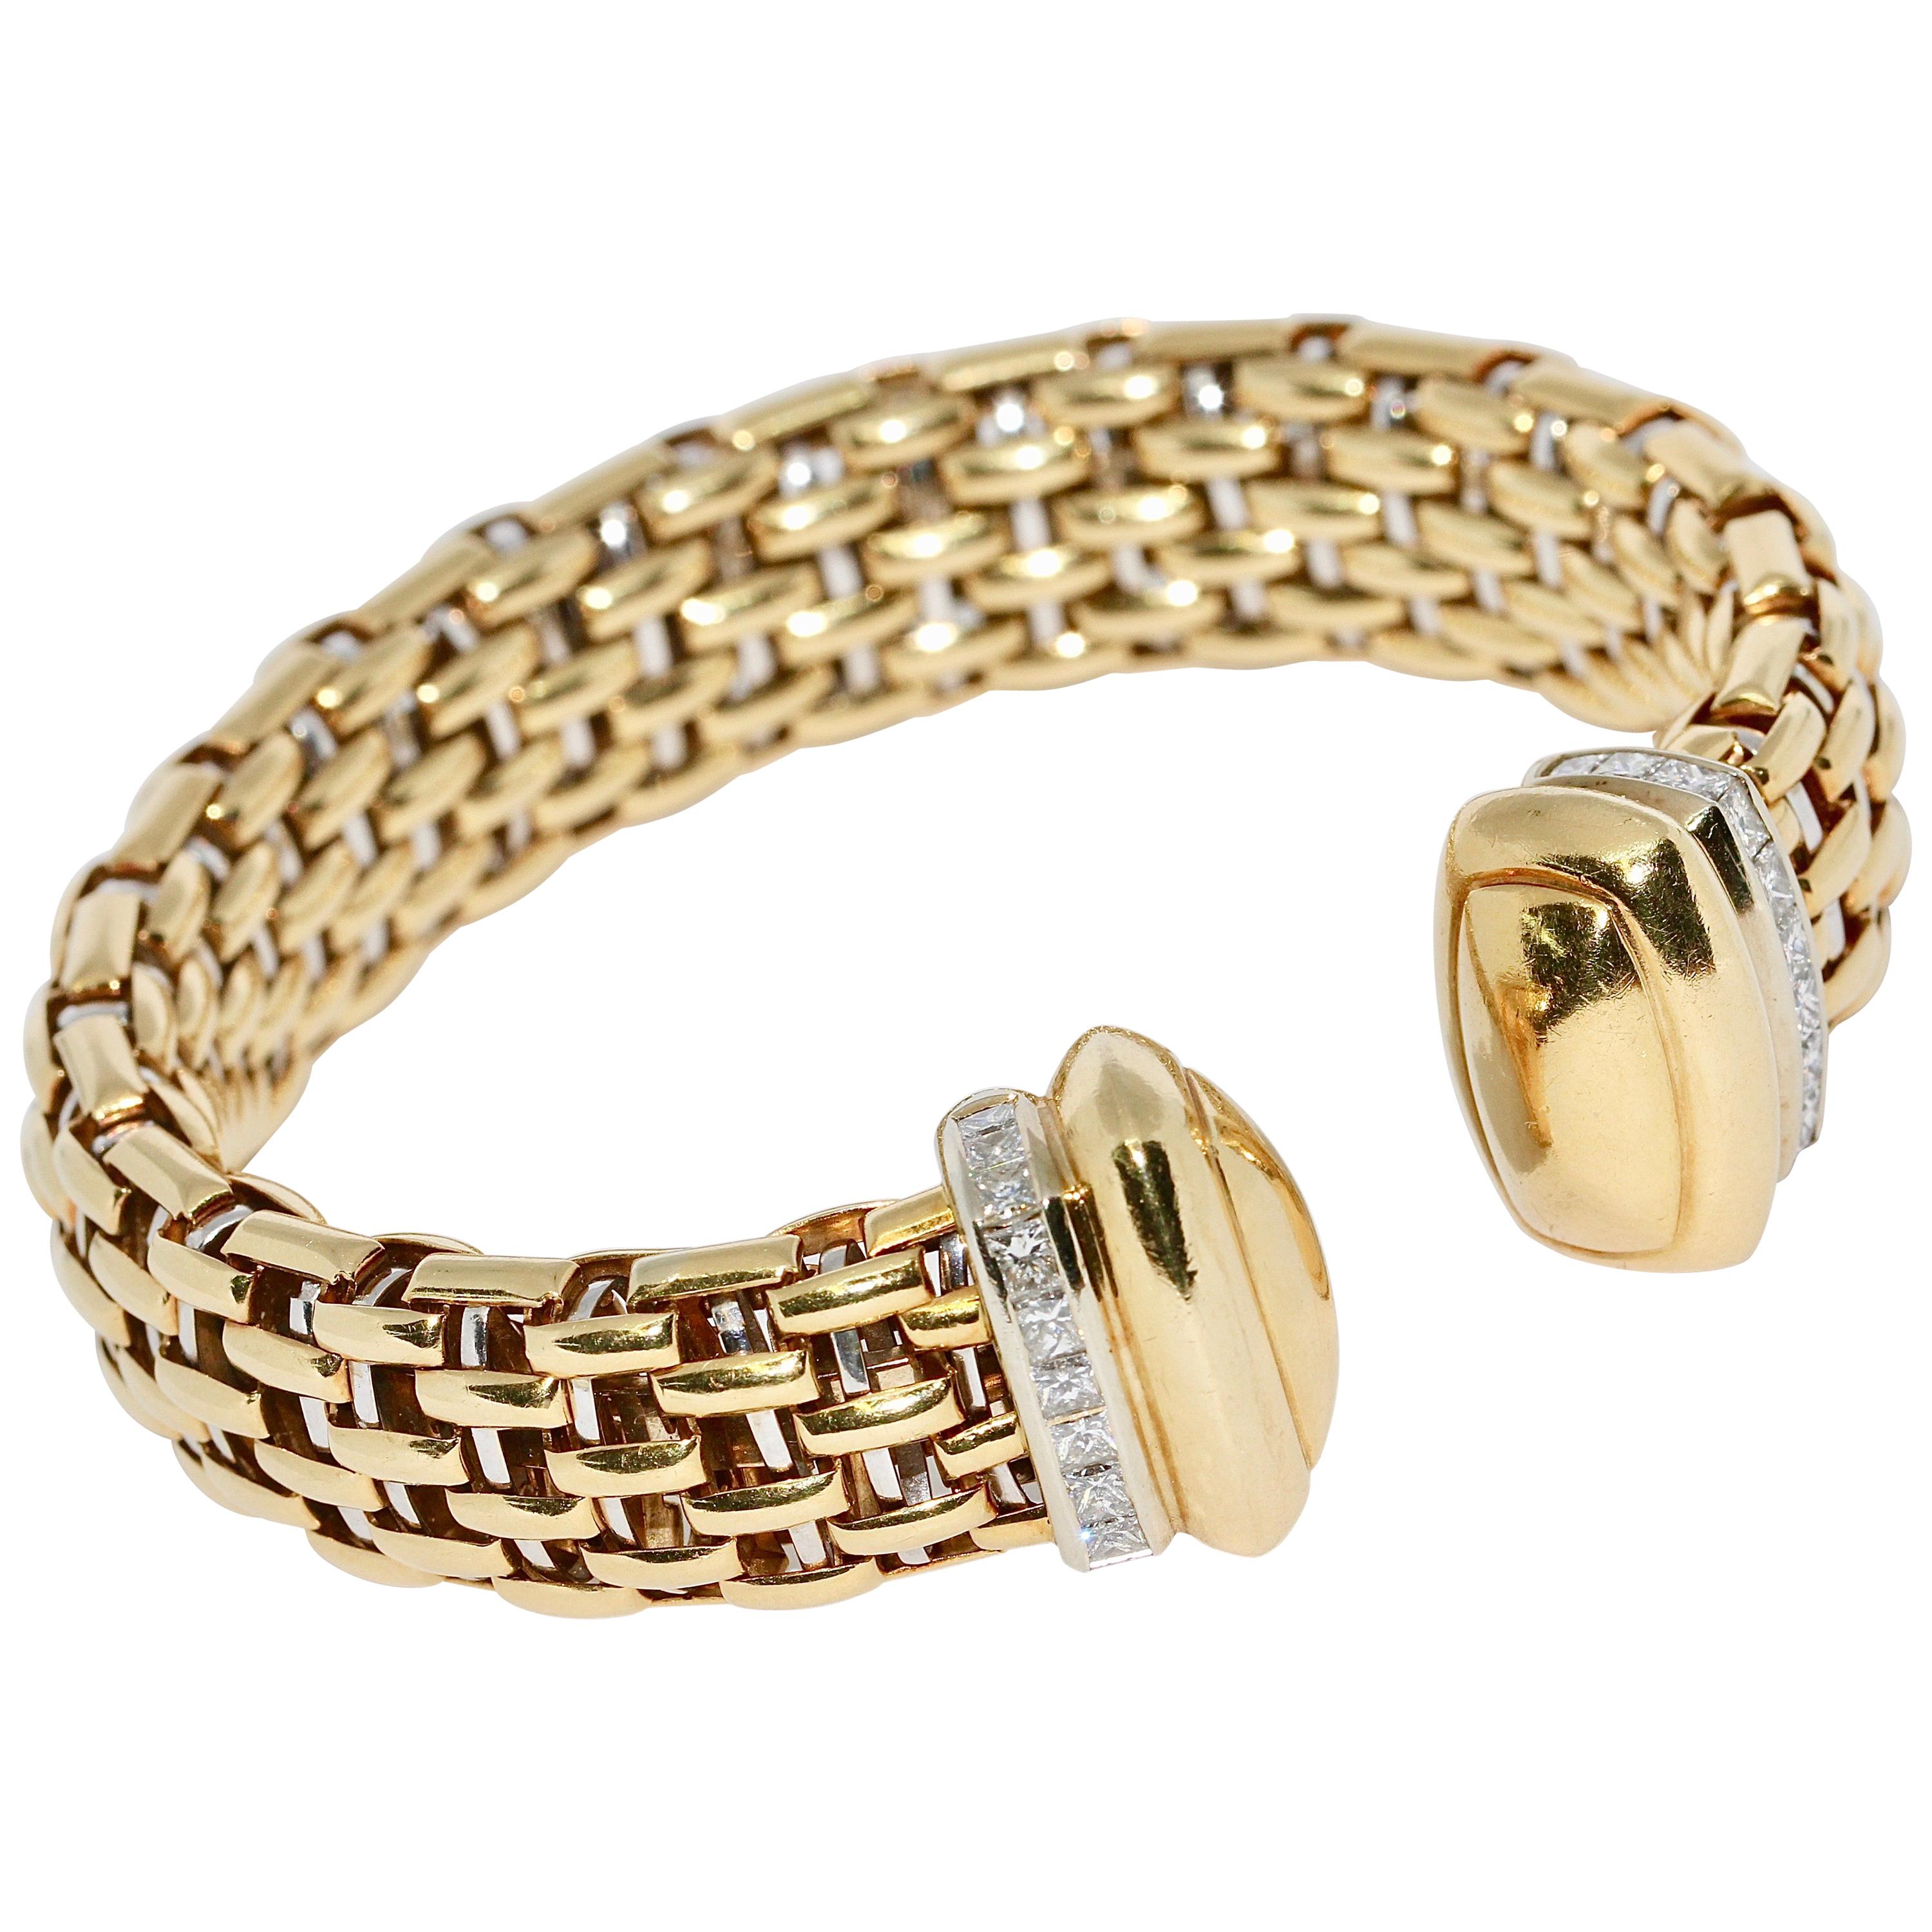 Massive Gold Bangle, Bracelet, 18 Karat with 24 Princess Cut Diamonds